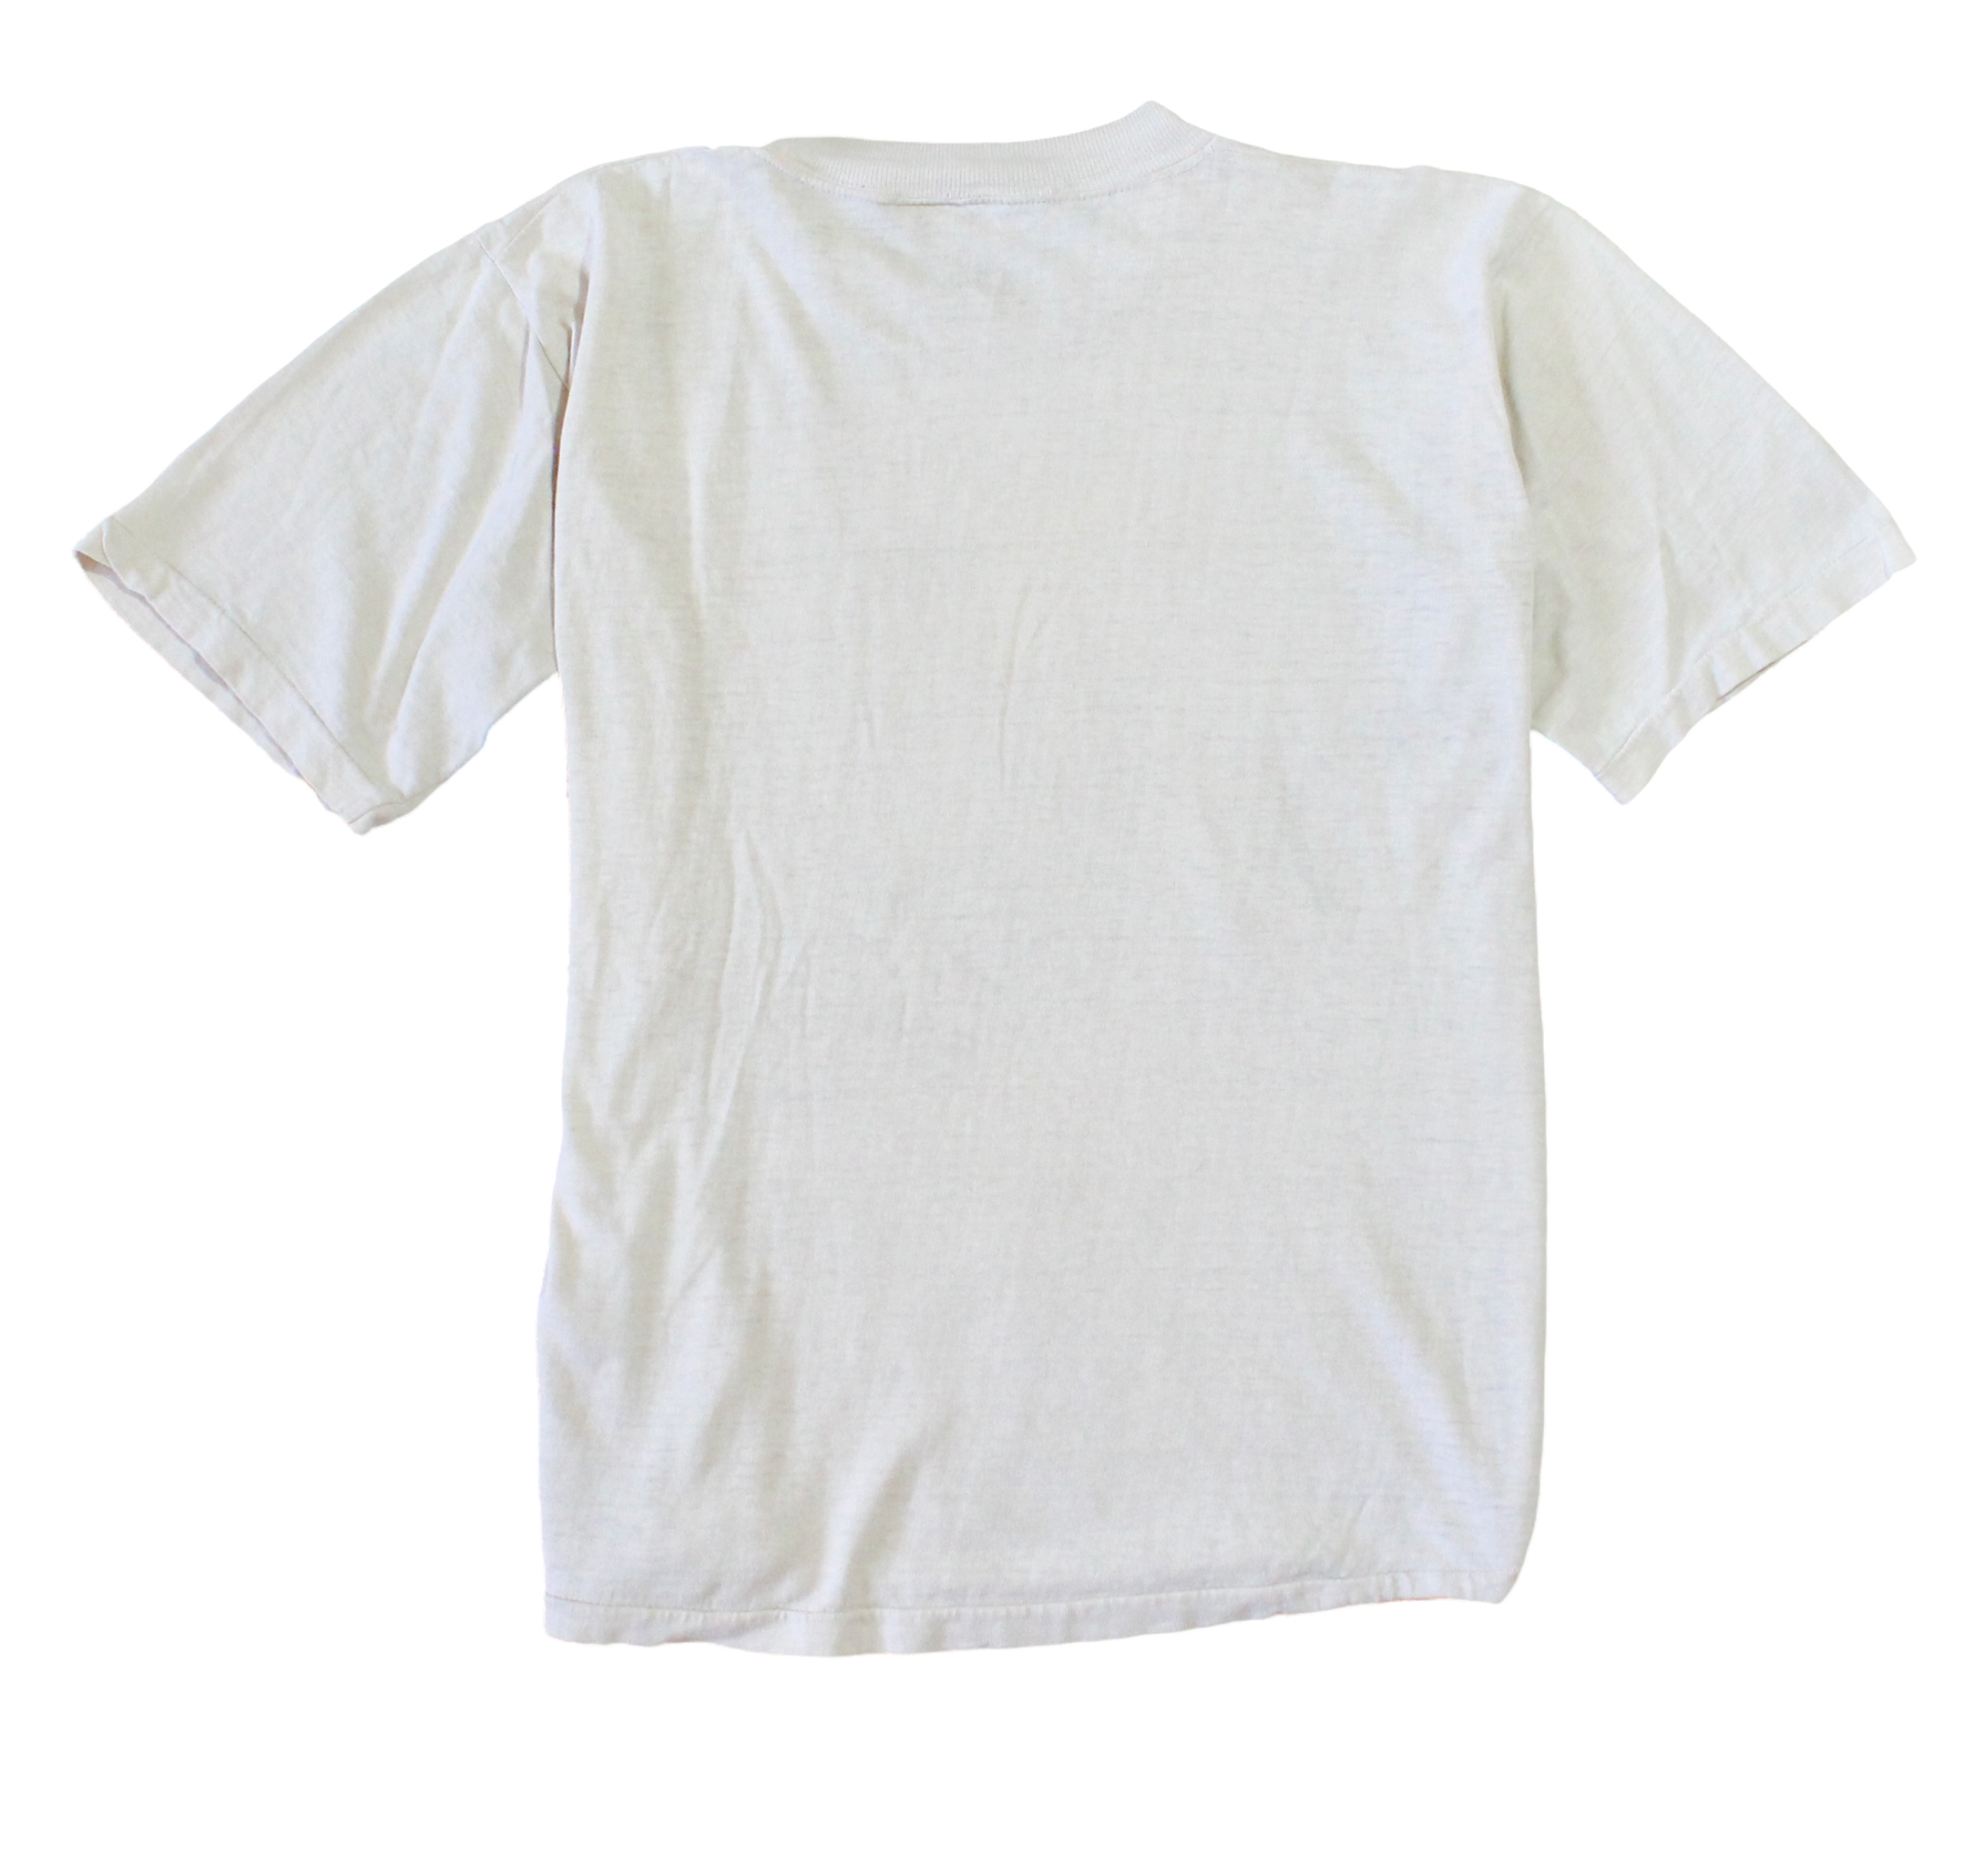 Coleman Trapp's T-Shirt